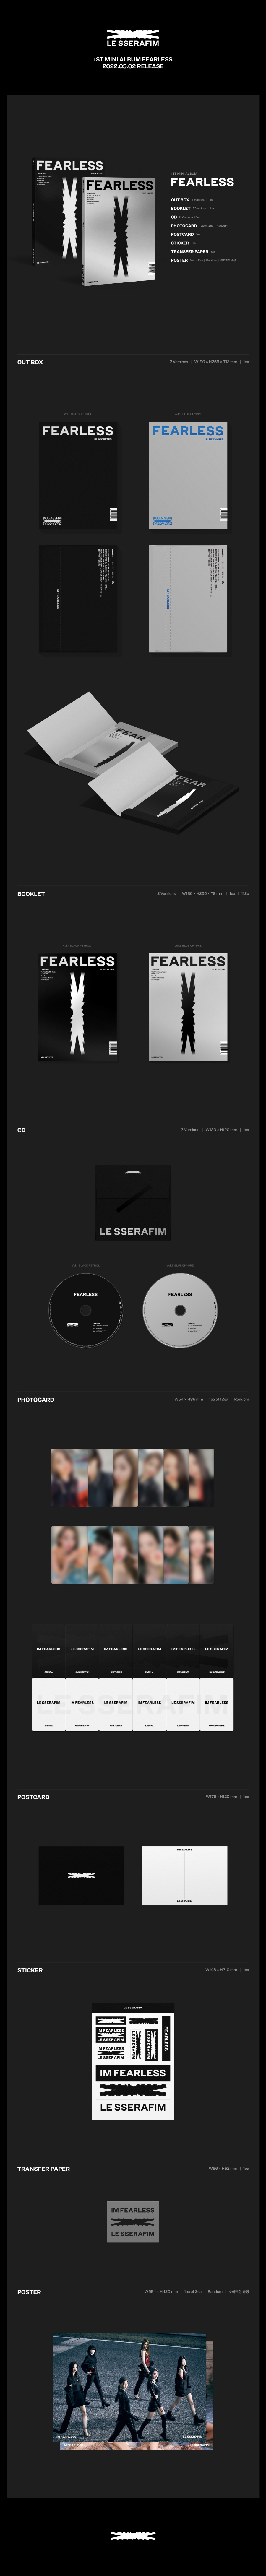 LE SSERAFIM - 1ST MINI ALBUM [FEARLESS](Random Ver.) album cd LESSERAFIM LESSERAFIMalbum LESSERAFIMcd LESSERAFIMminialbum FEARLESS LESSERAFIMFEARLESS IMFEARLESS SOURCEMUSIC